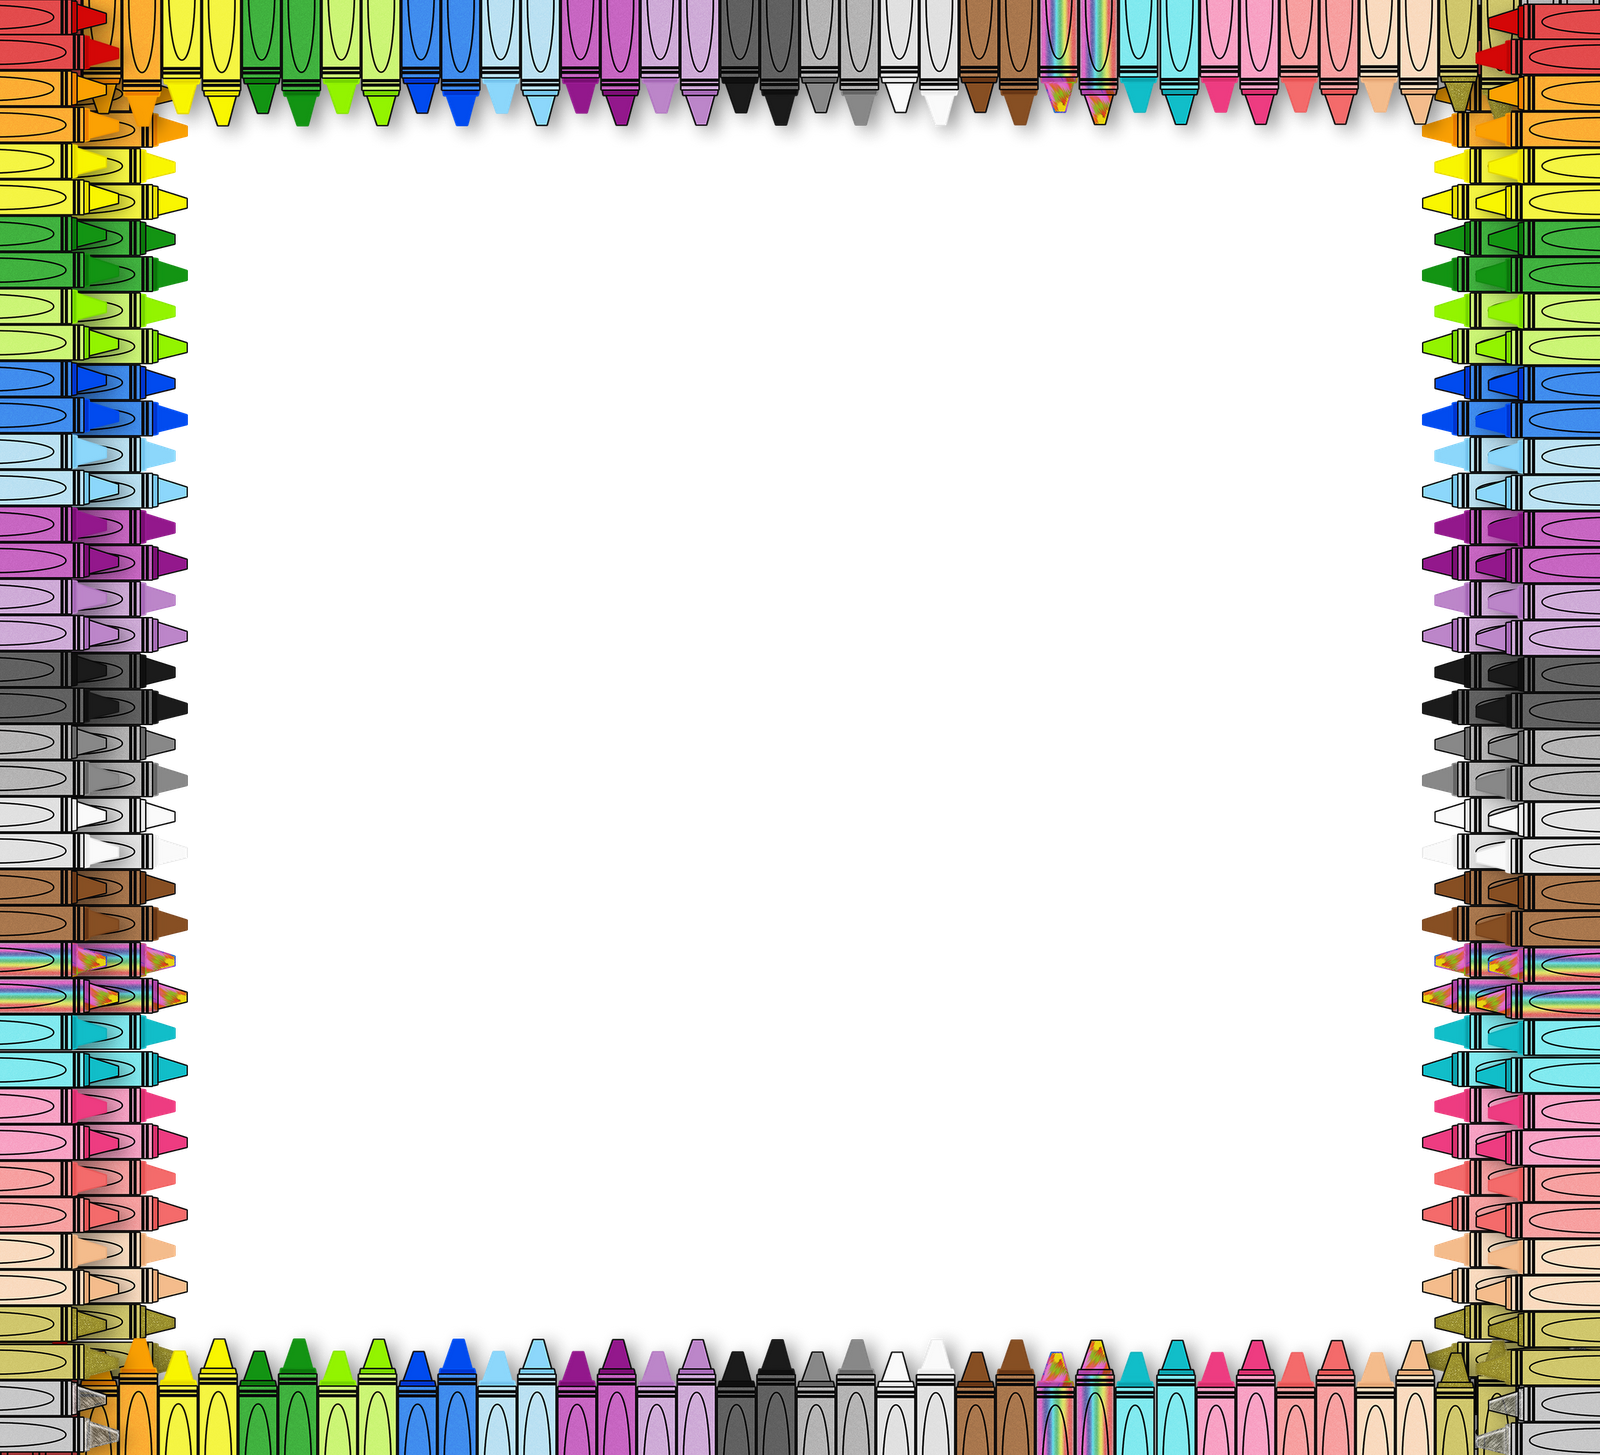 Free Crayon Border Png, Download Free Crayon Border Png png images